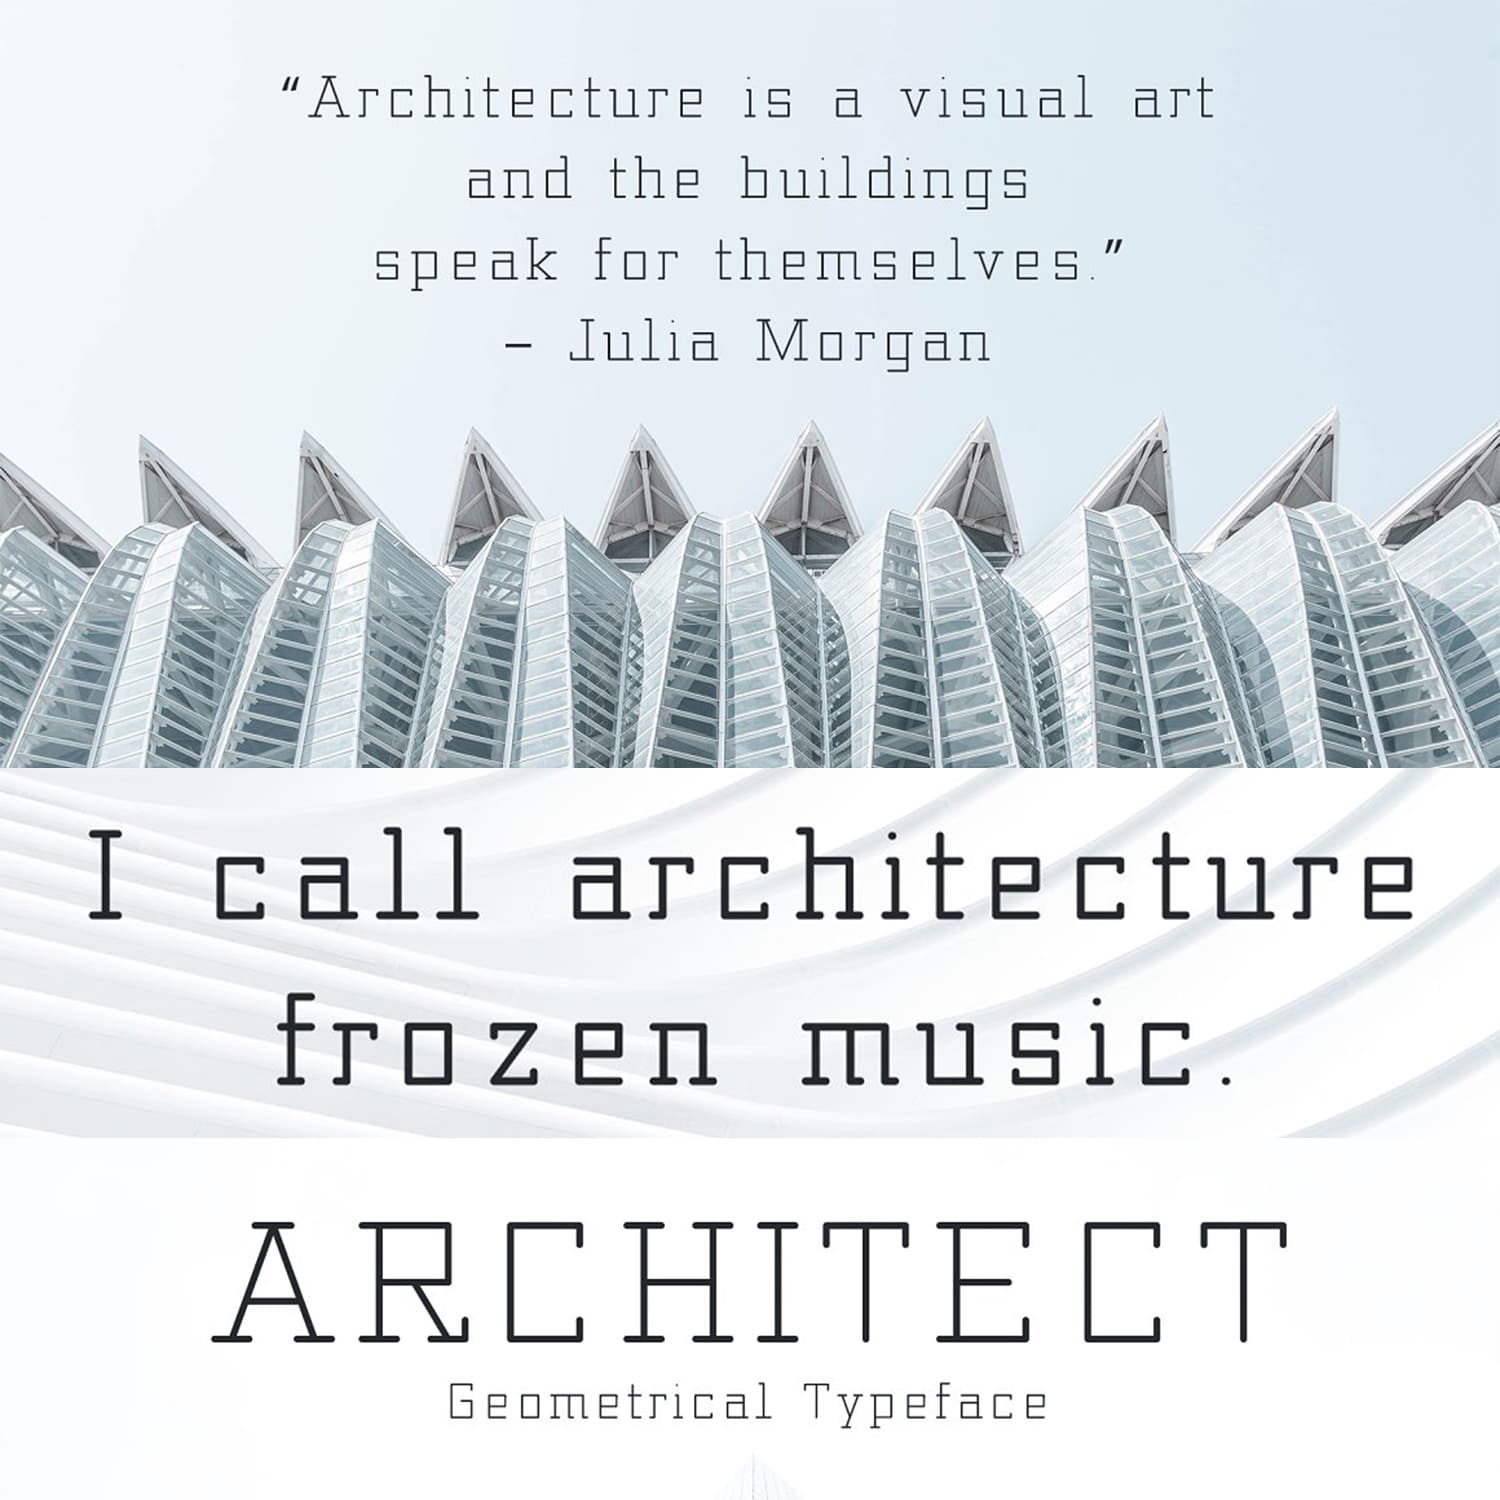 Architect - Geometrical Typeface cover image.